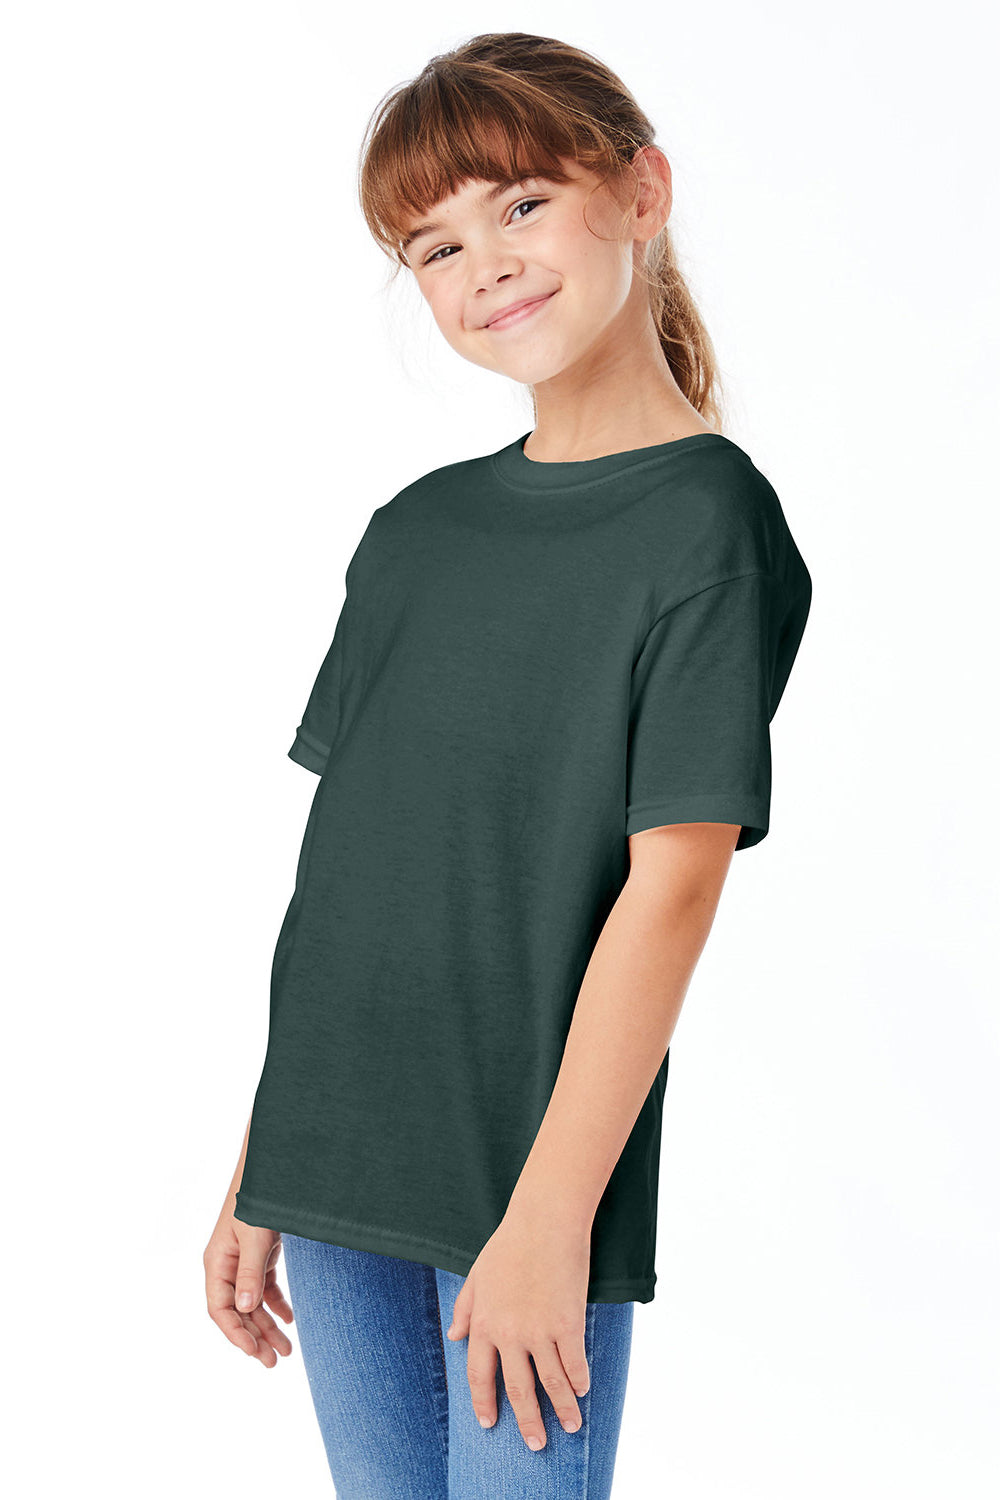 Hanes 5480 Youth ComfortSoft Short Sleeve Crewneck T-Shirt Athletic Dark Green 3Q